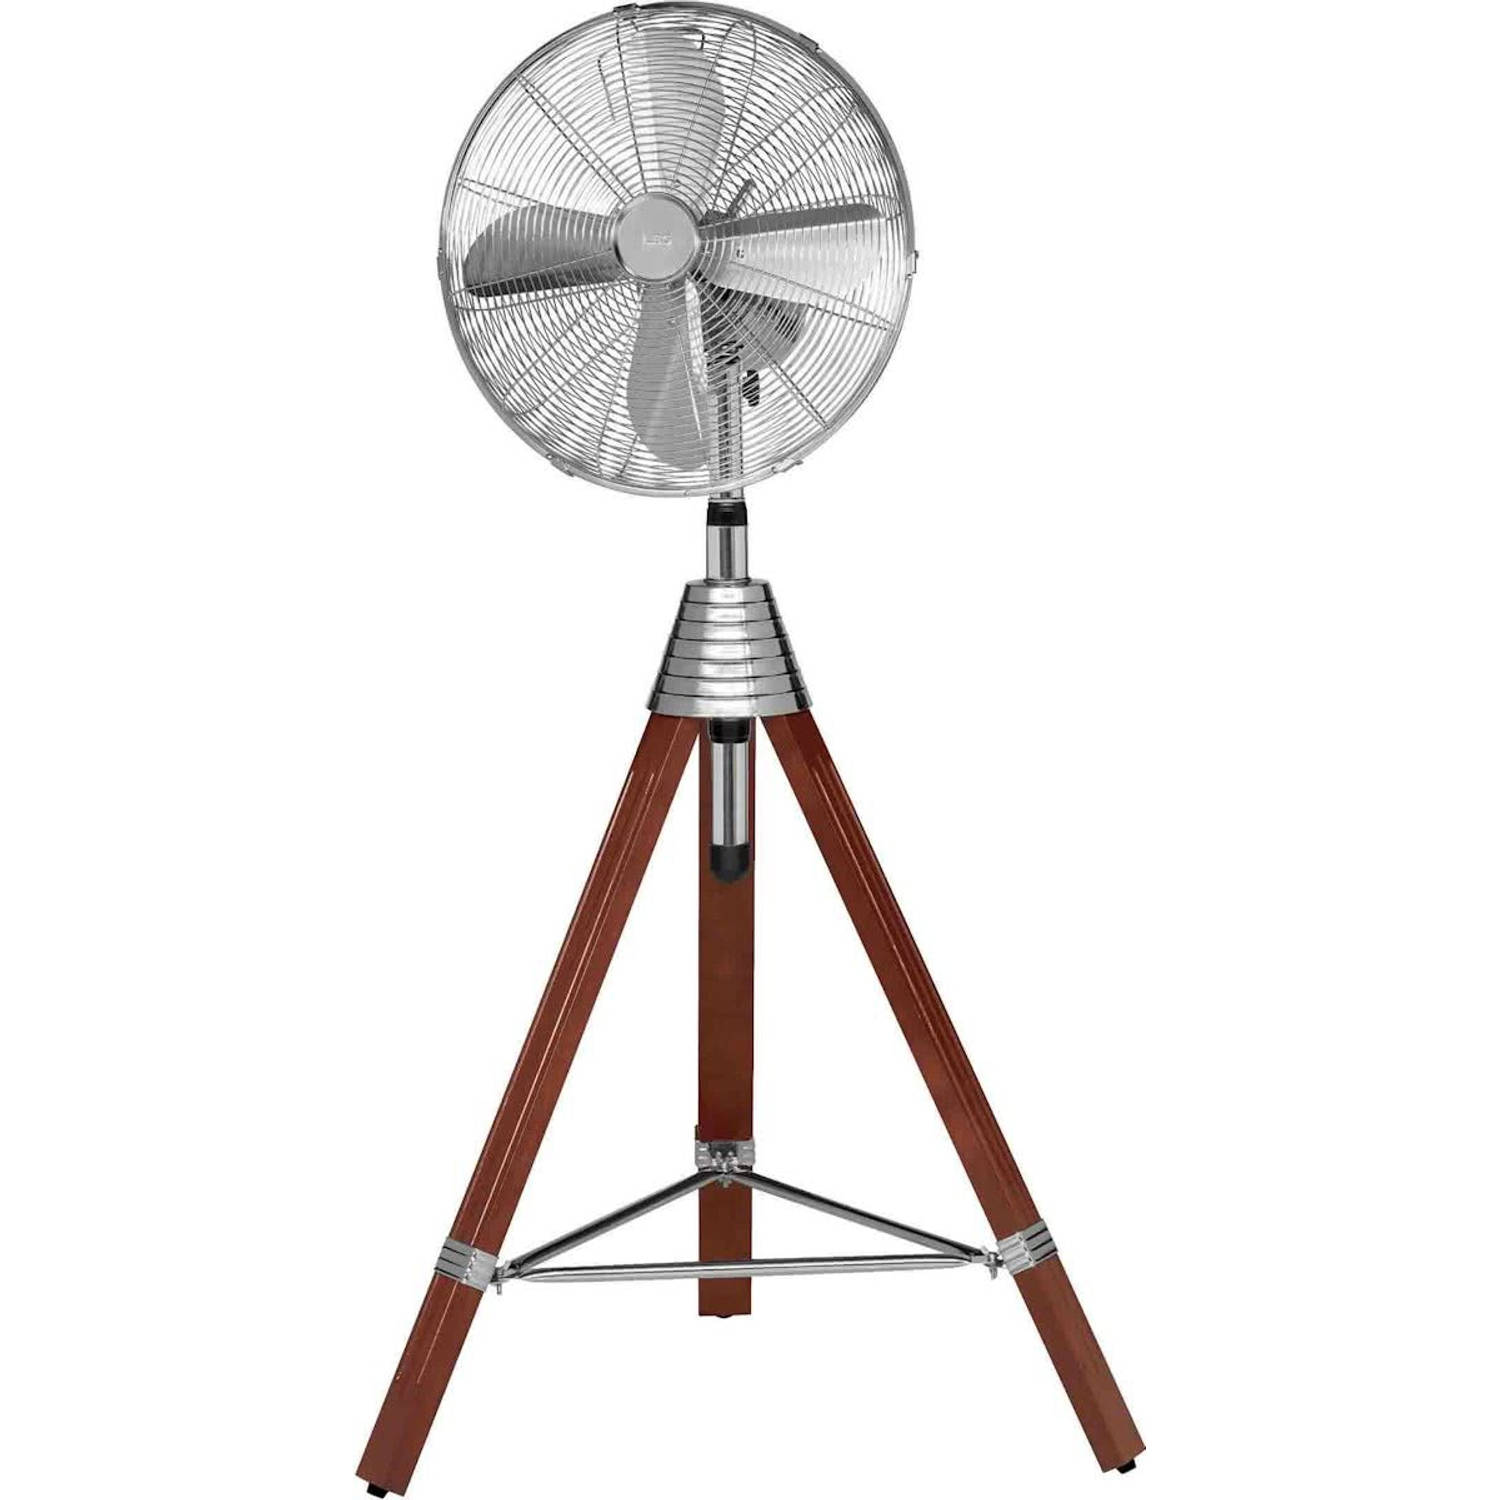 AEG Stand-Ventilator 40cm VL 5688 S (Holz-Inox)